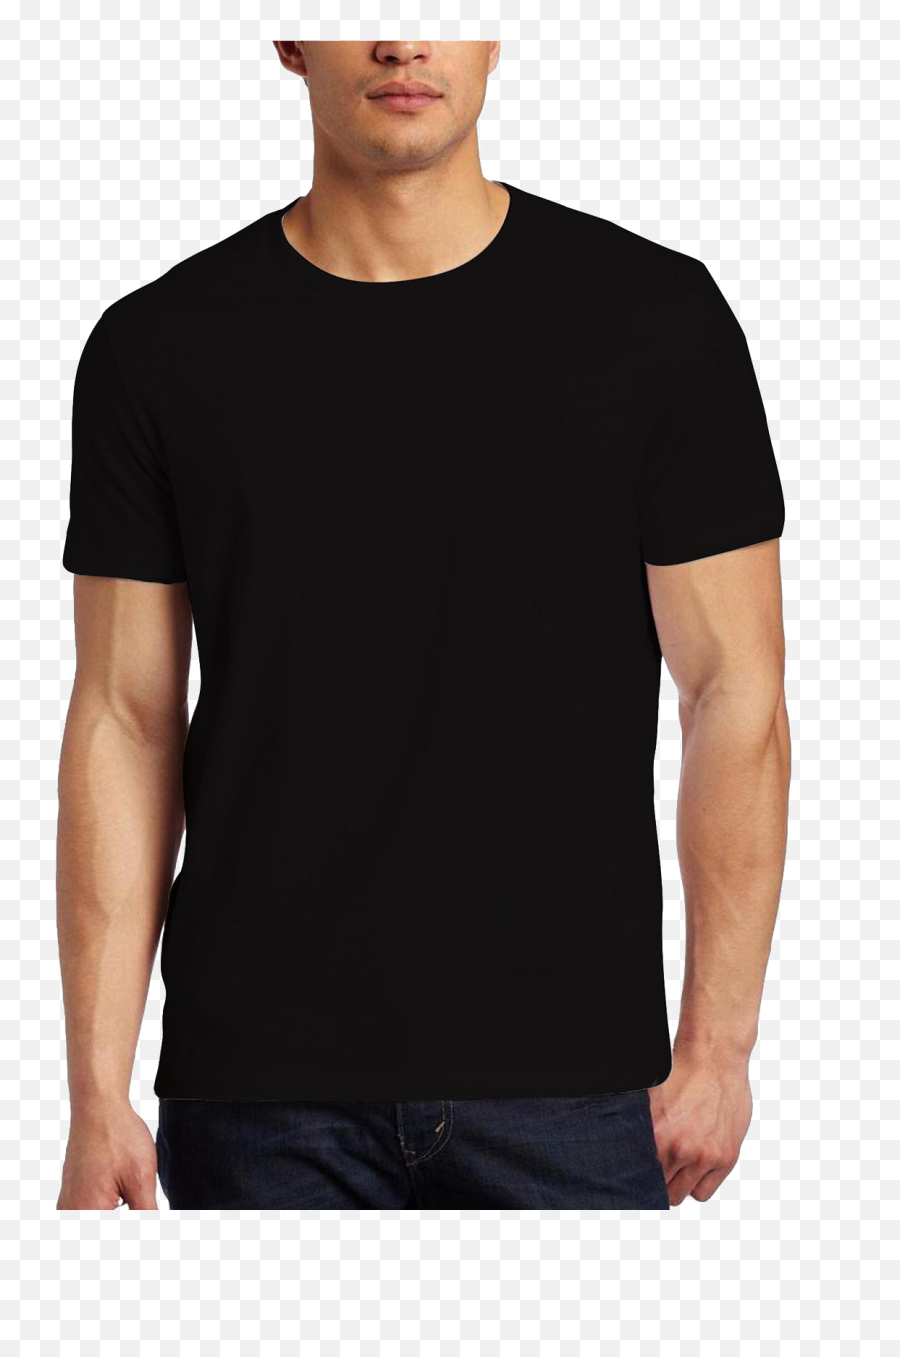 Download Free Png Black T - Shirt Png Image Background Png Black T Shirt Without Background Emoji,T Shirt Png